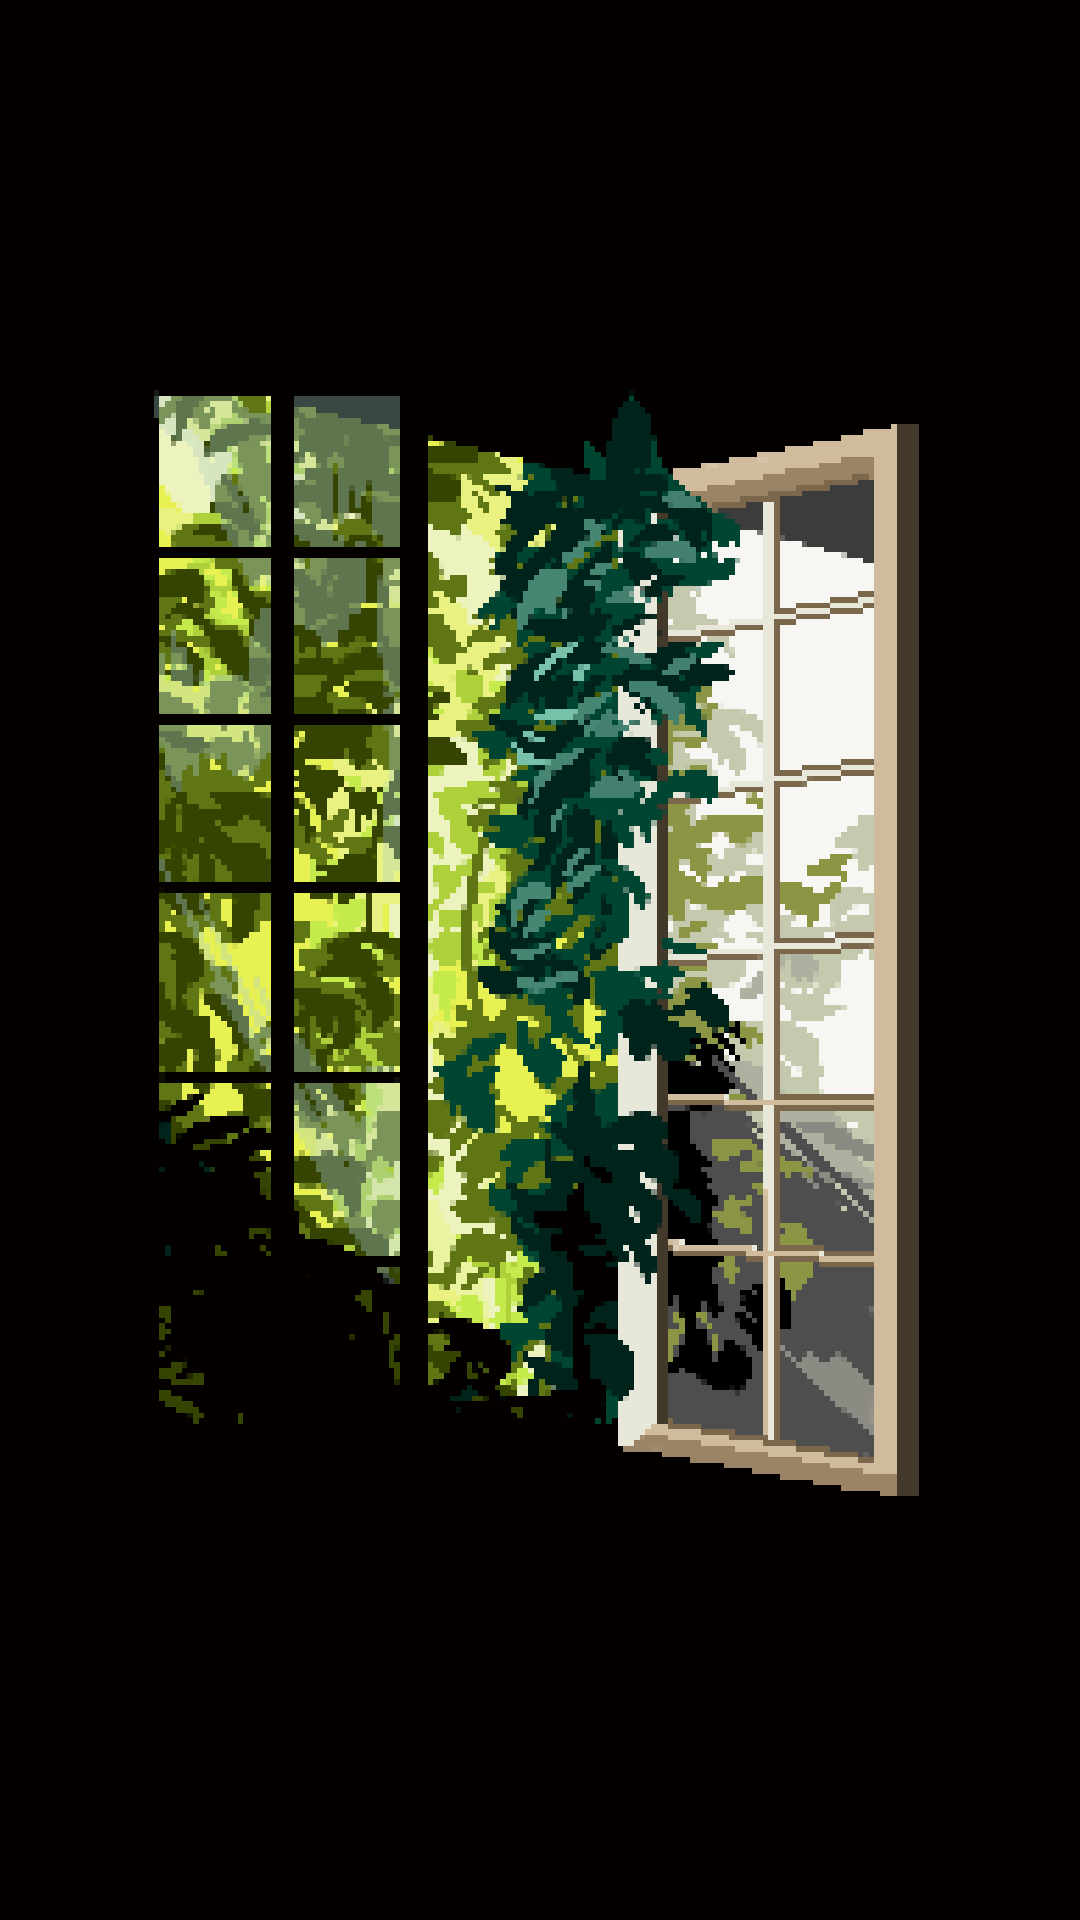 phone bg of greenery through an open window